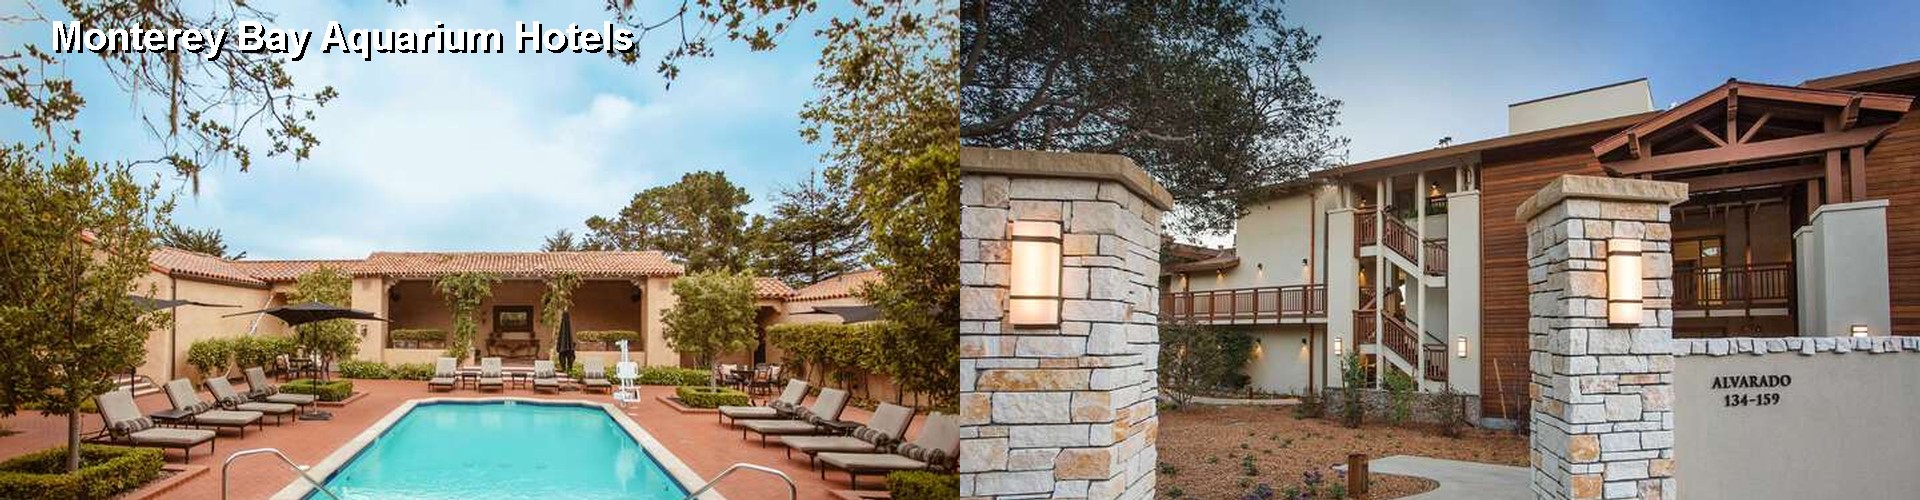 5 Best Hotels near Monterey Bay Aquarium